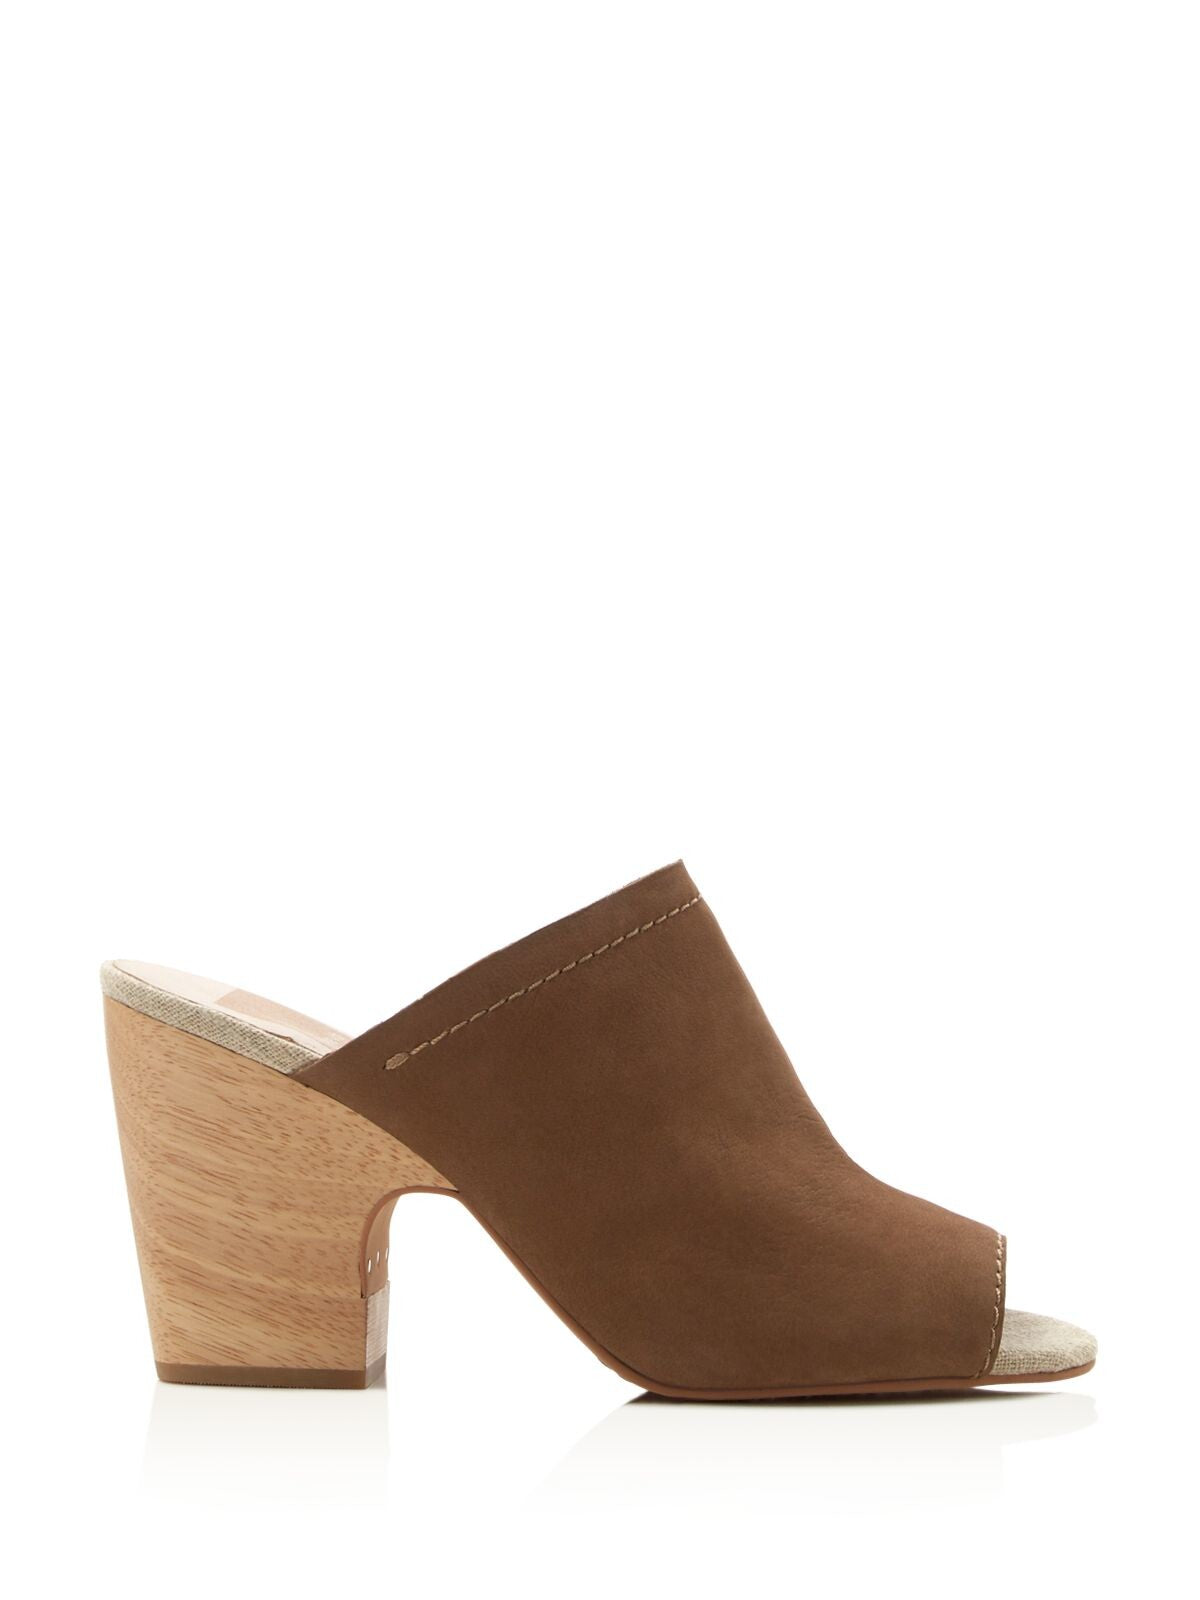 DOLCE VITA Womens Brown Elastic Goring Padded Comfort Tegan Peep Toe Block Heel Slide Leather Heeled Mules Shoes 9 M